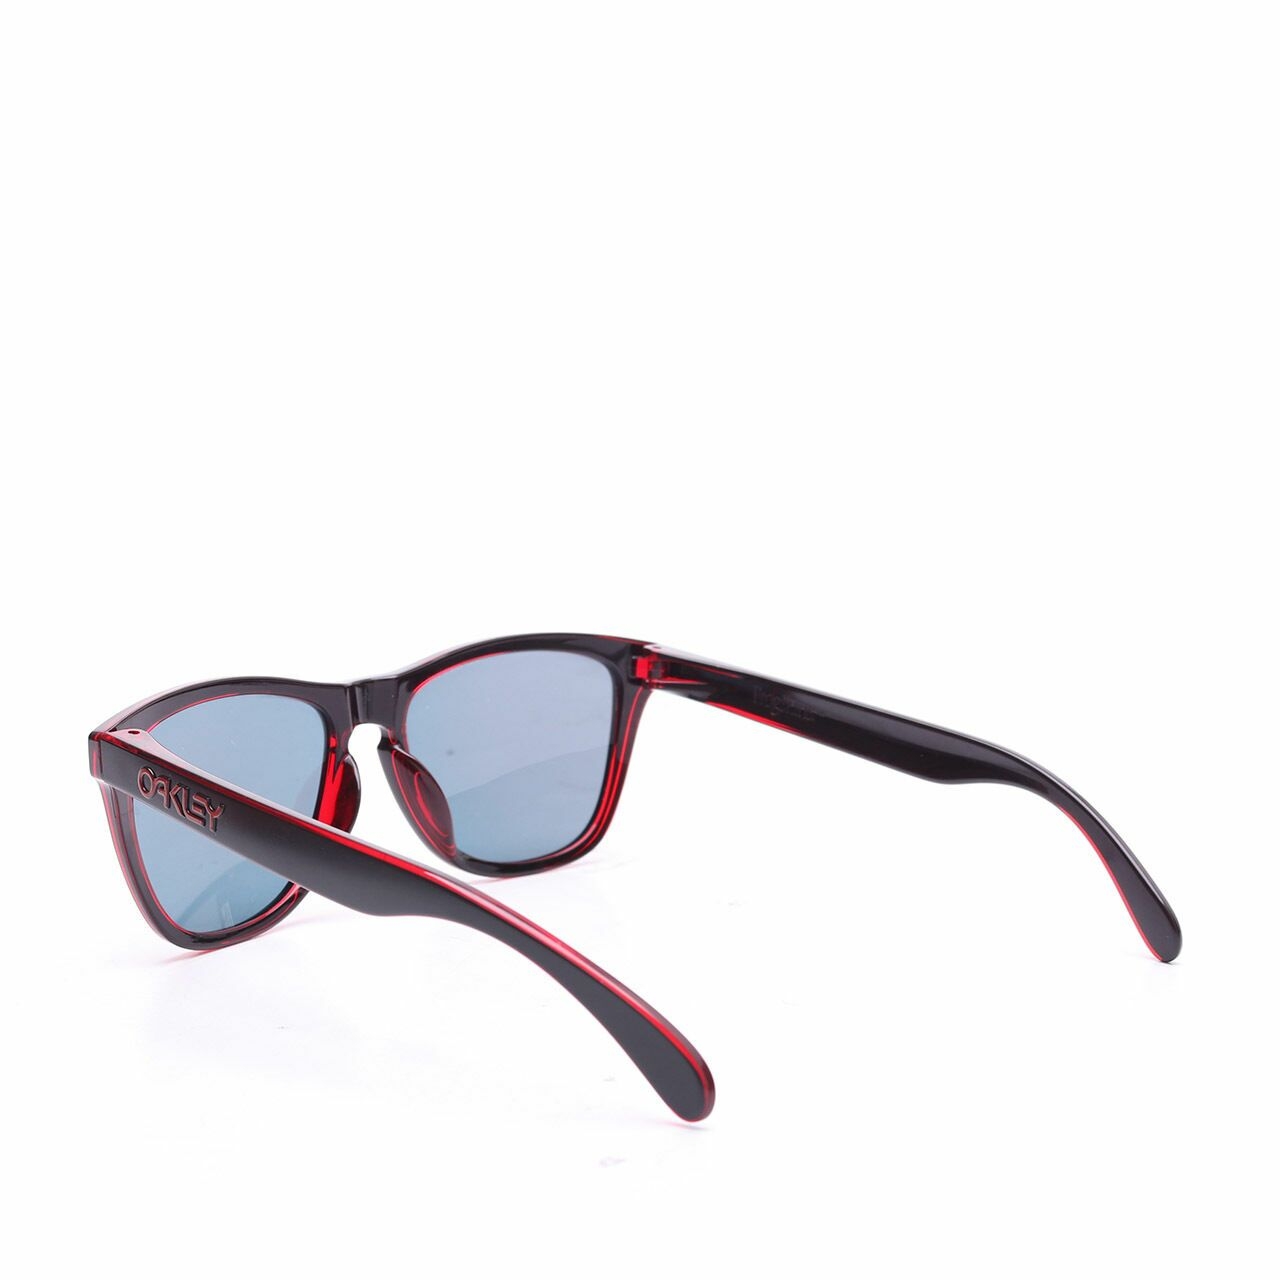 Oakley Red & Black Torch Iridium Frogskins Sunglasses